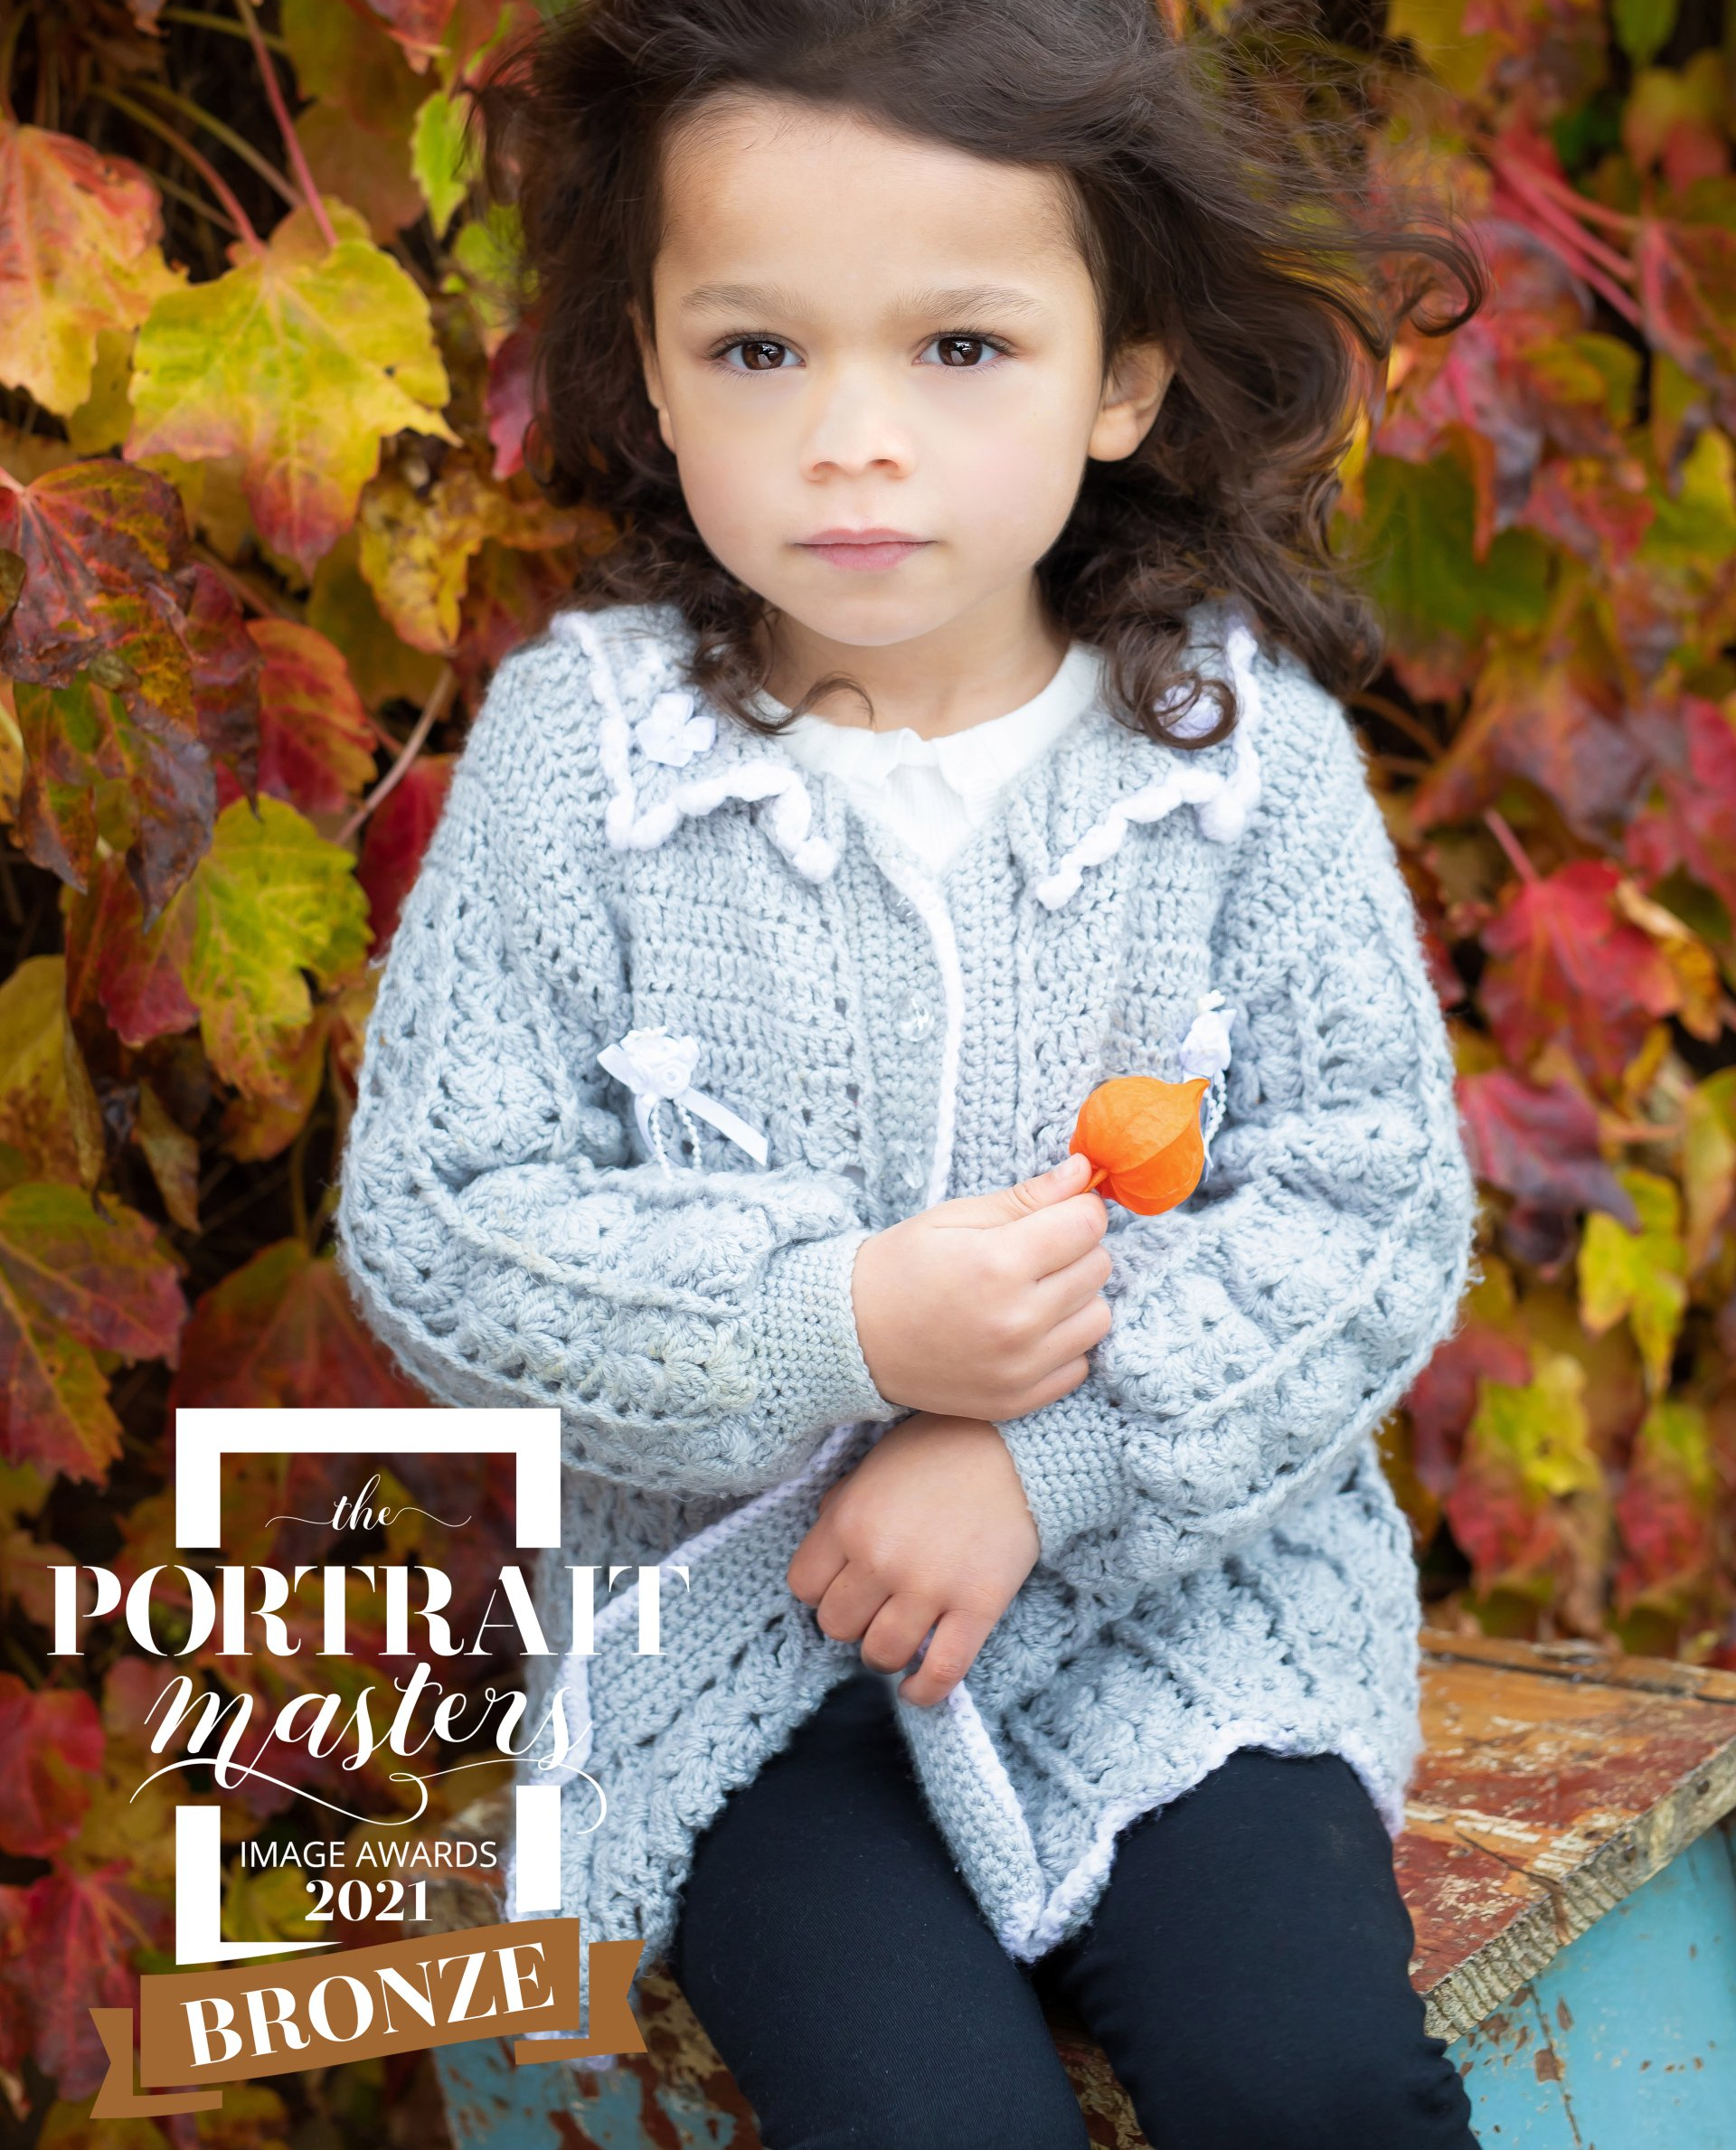 little girl looking at camera holding an orange leaf taken by award winning photographer kate mitford